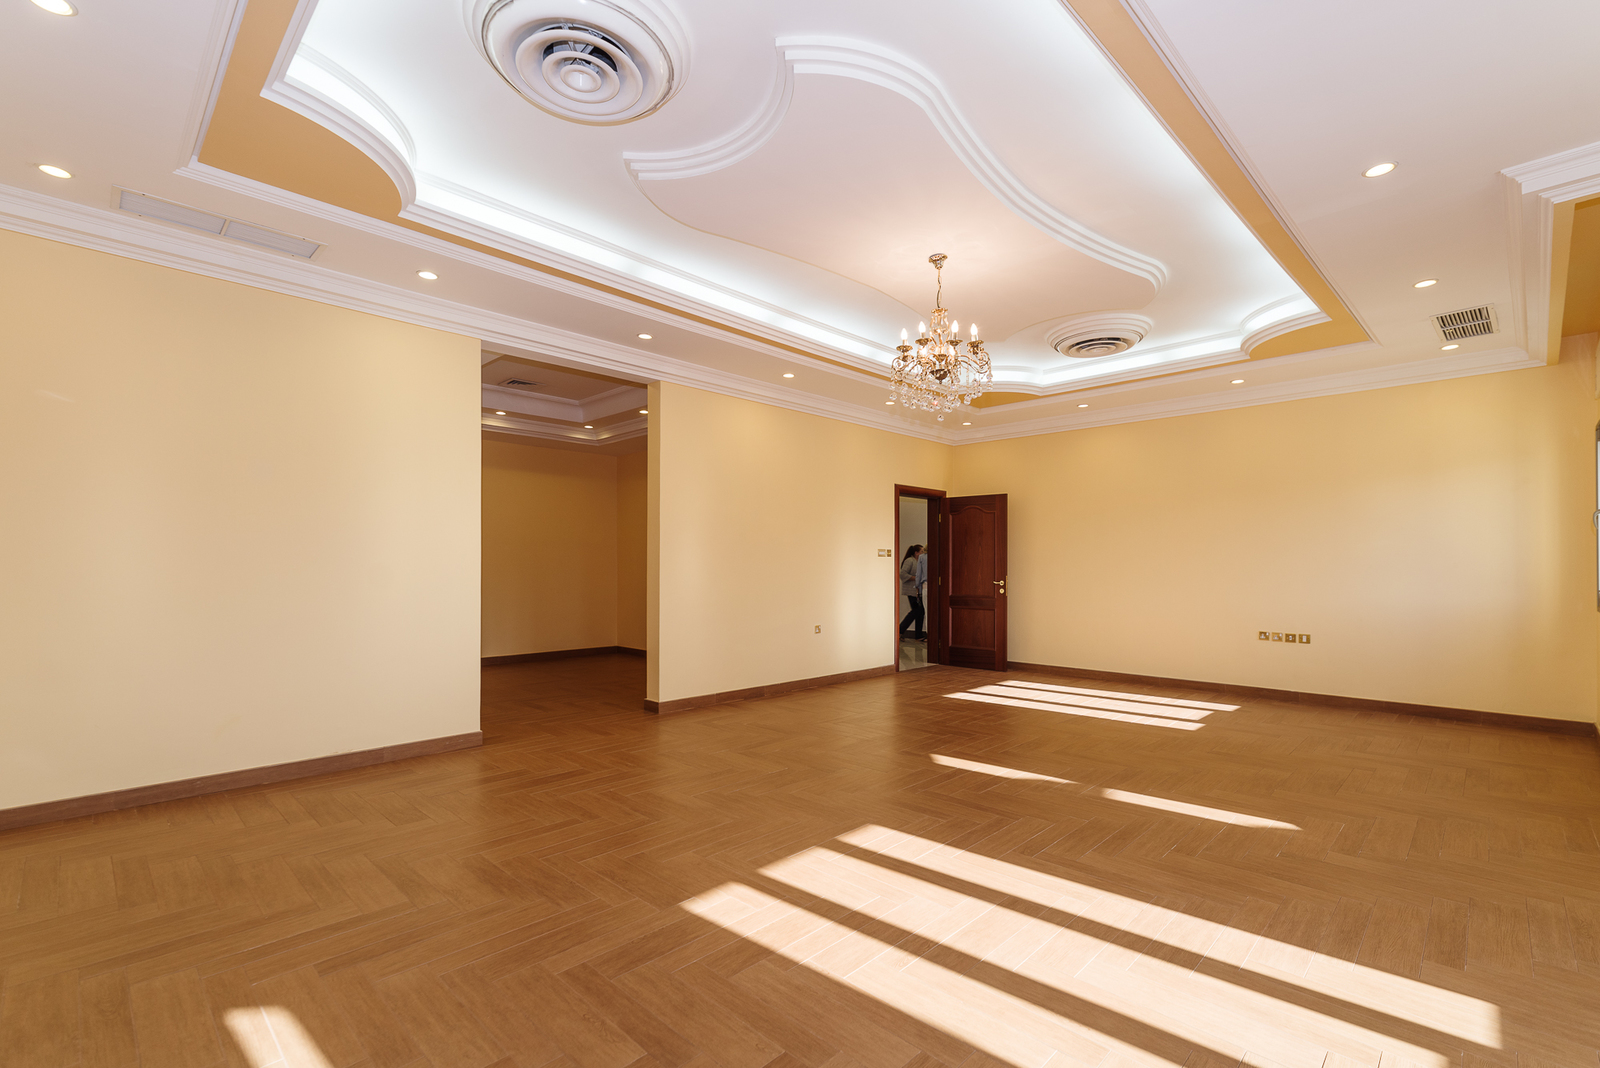 Bayan – fantastic, spacious, unfurnished five bedroom floor